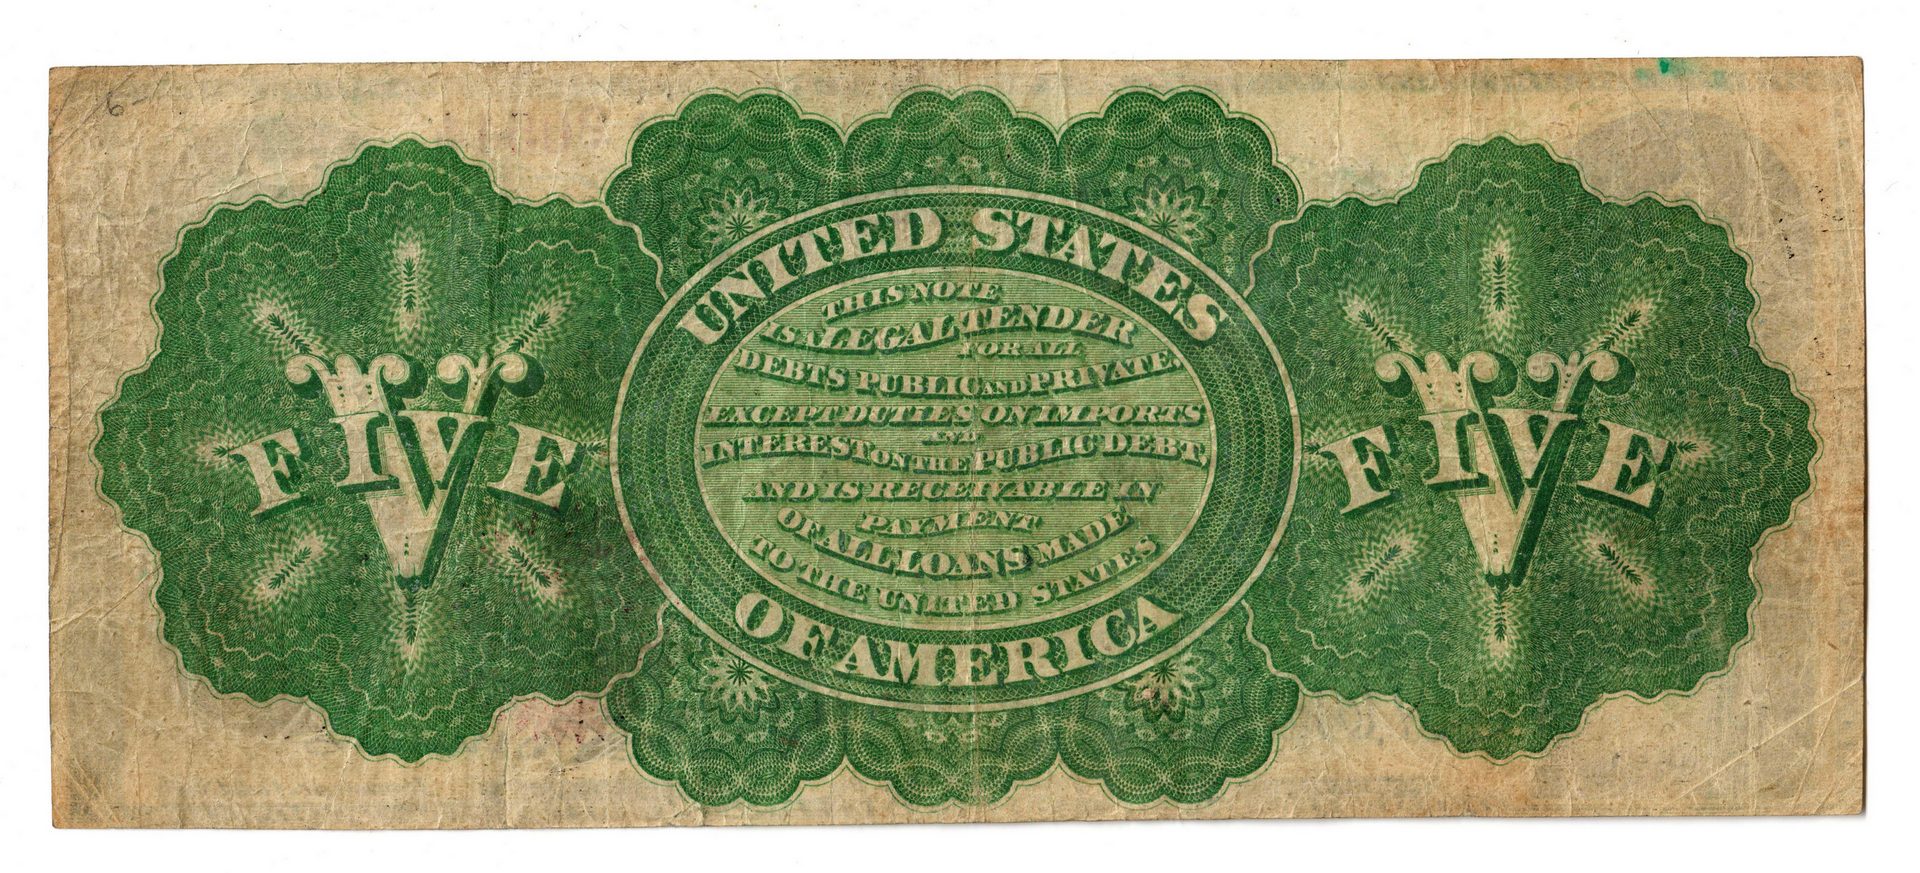 Lot 26: 1863 U.S. $5 Red Seal Legal Tender Note